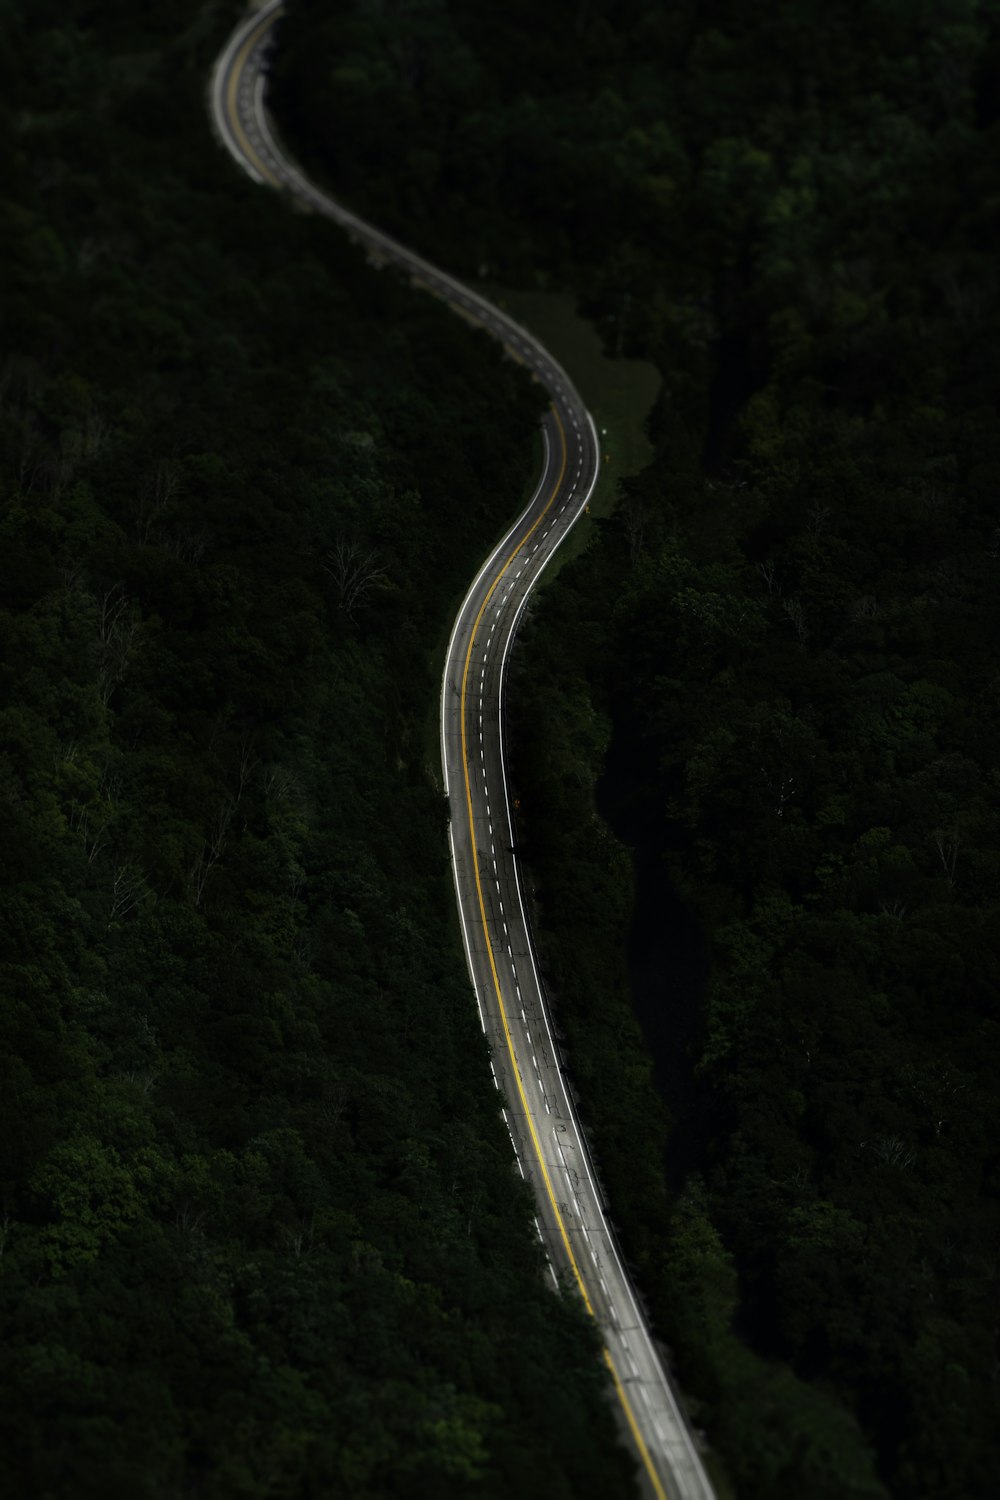 estrada sinuosa de asfalto cercada por árvores altas fotografia aérea